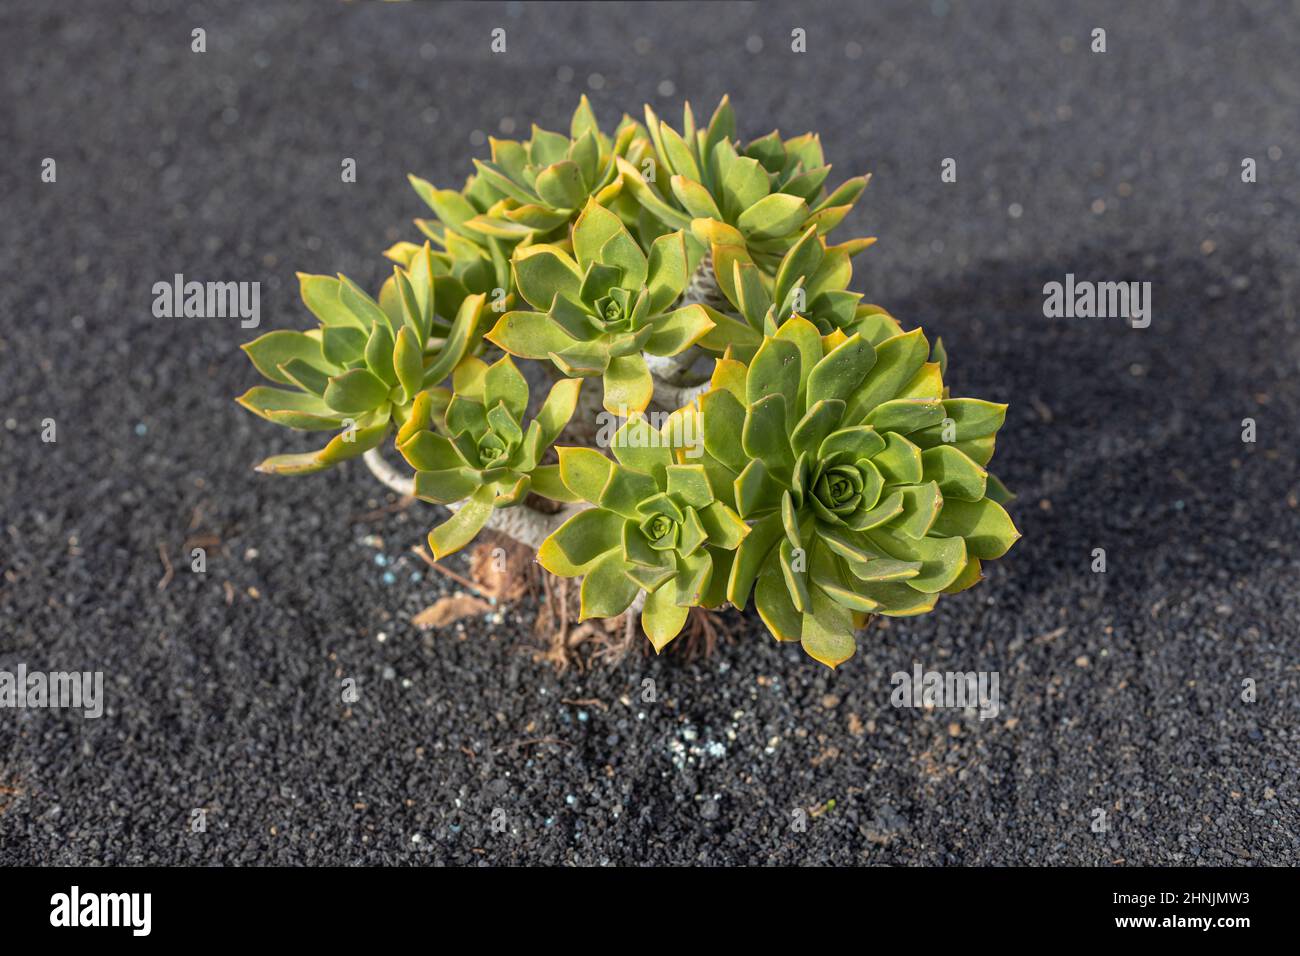 Aeonium lancerottense on black background. Stock Photo